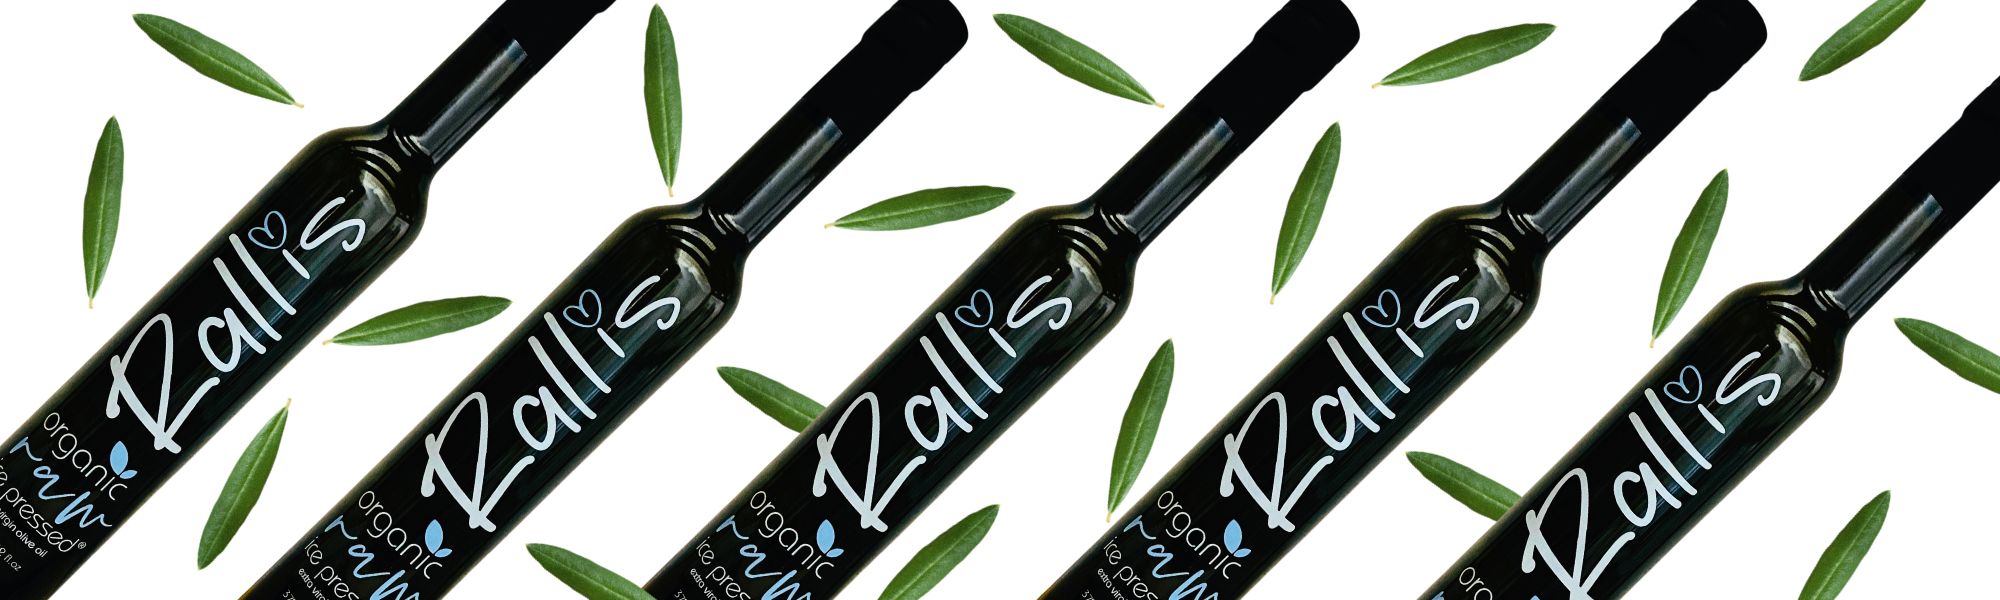 Rallis Olive Oil, Extra Virgin Olive Oil, High Polyphenol Olive Oil